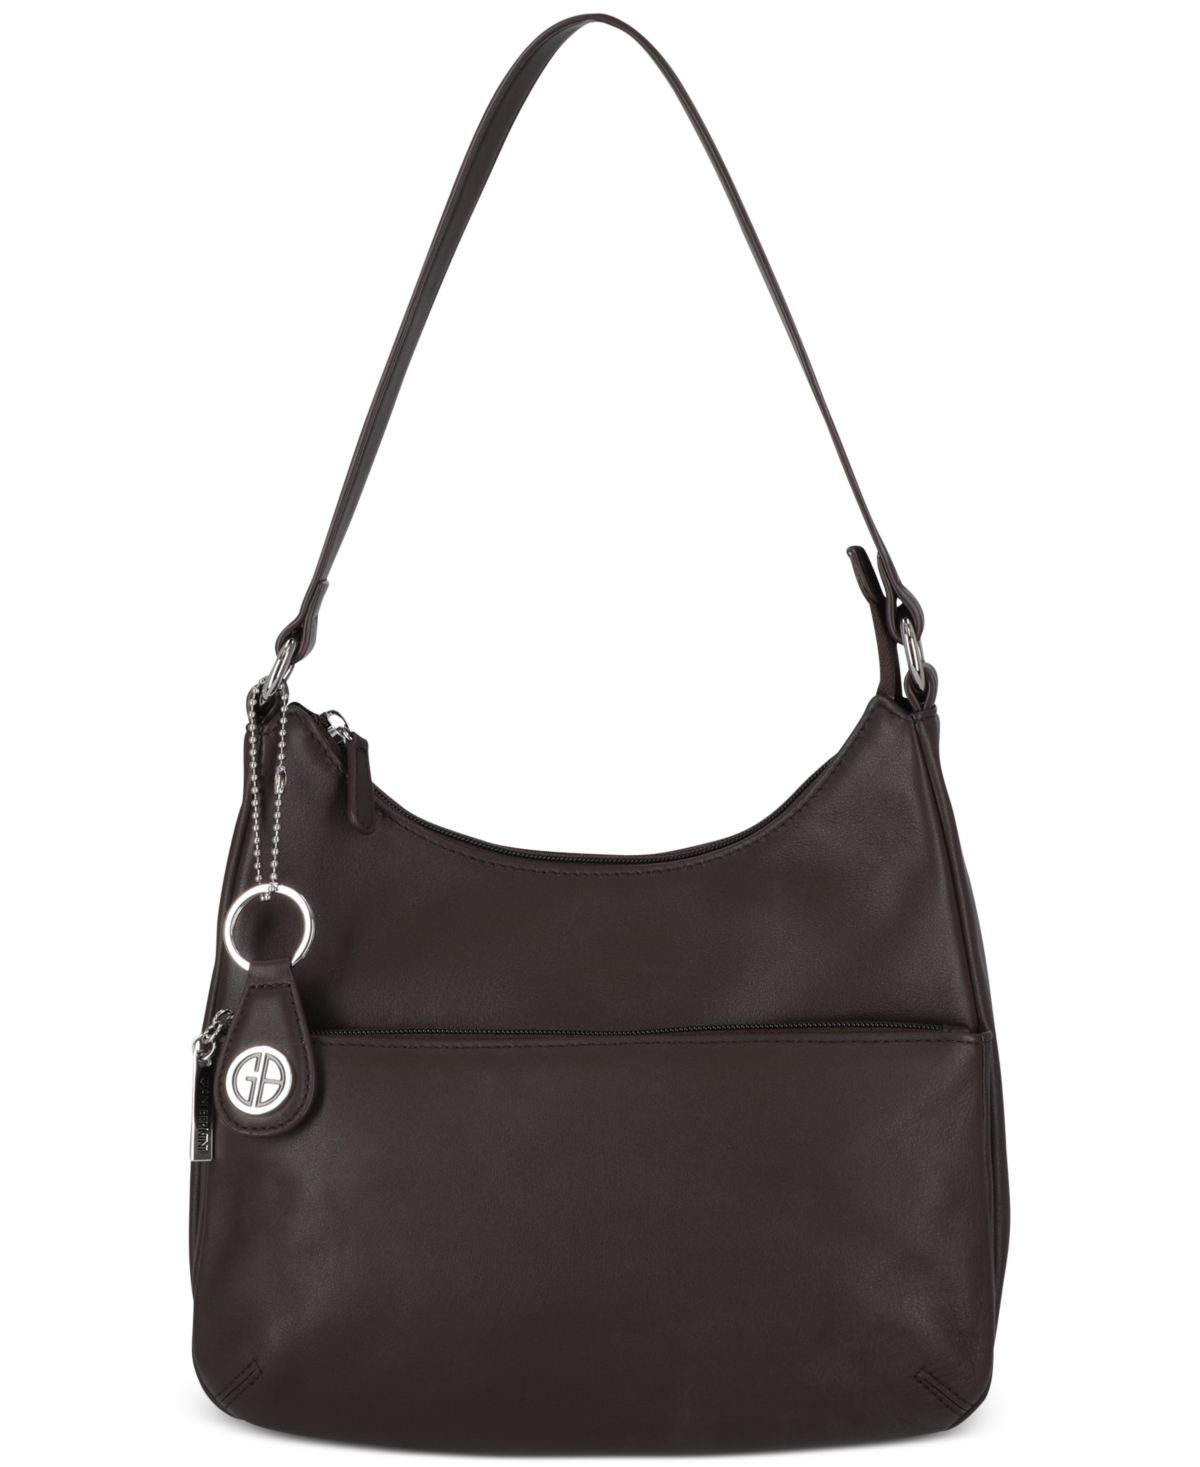 Giani Bernini Nappa Leather Hobo Bag, Created For Macy's In Chocolate ...